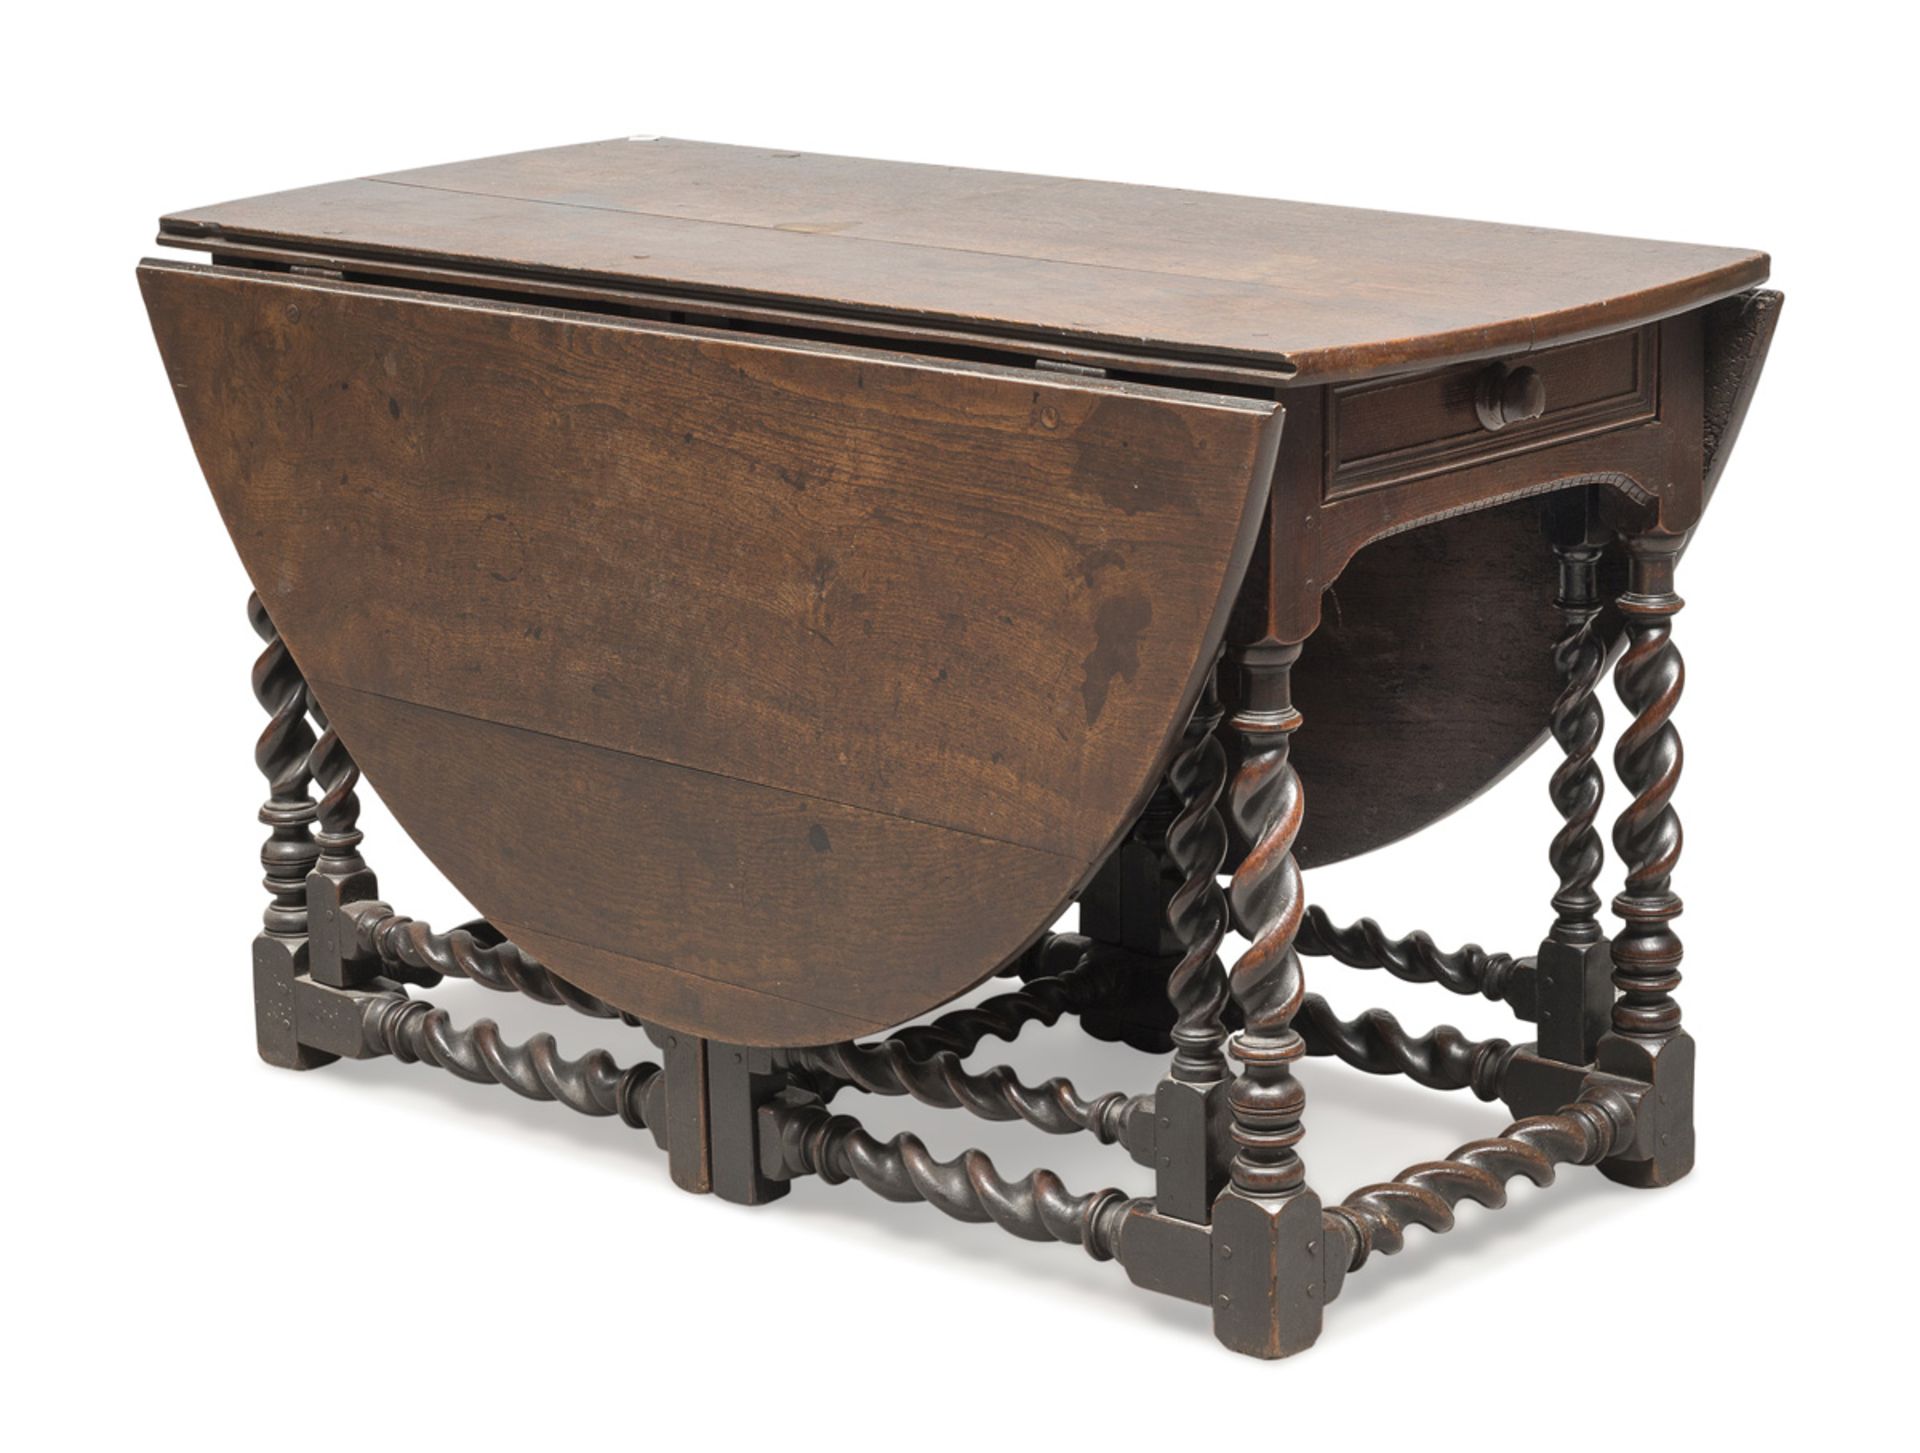 RARE DROP LEAF TABLE IN OAK - ENGLAND 18TH CENTURY